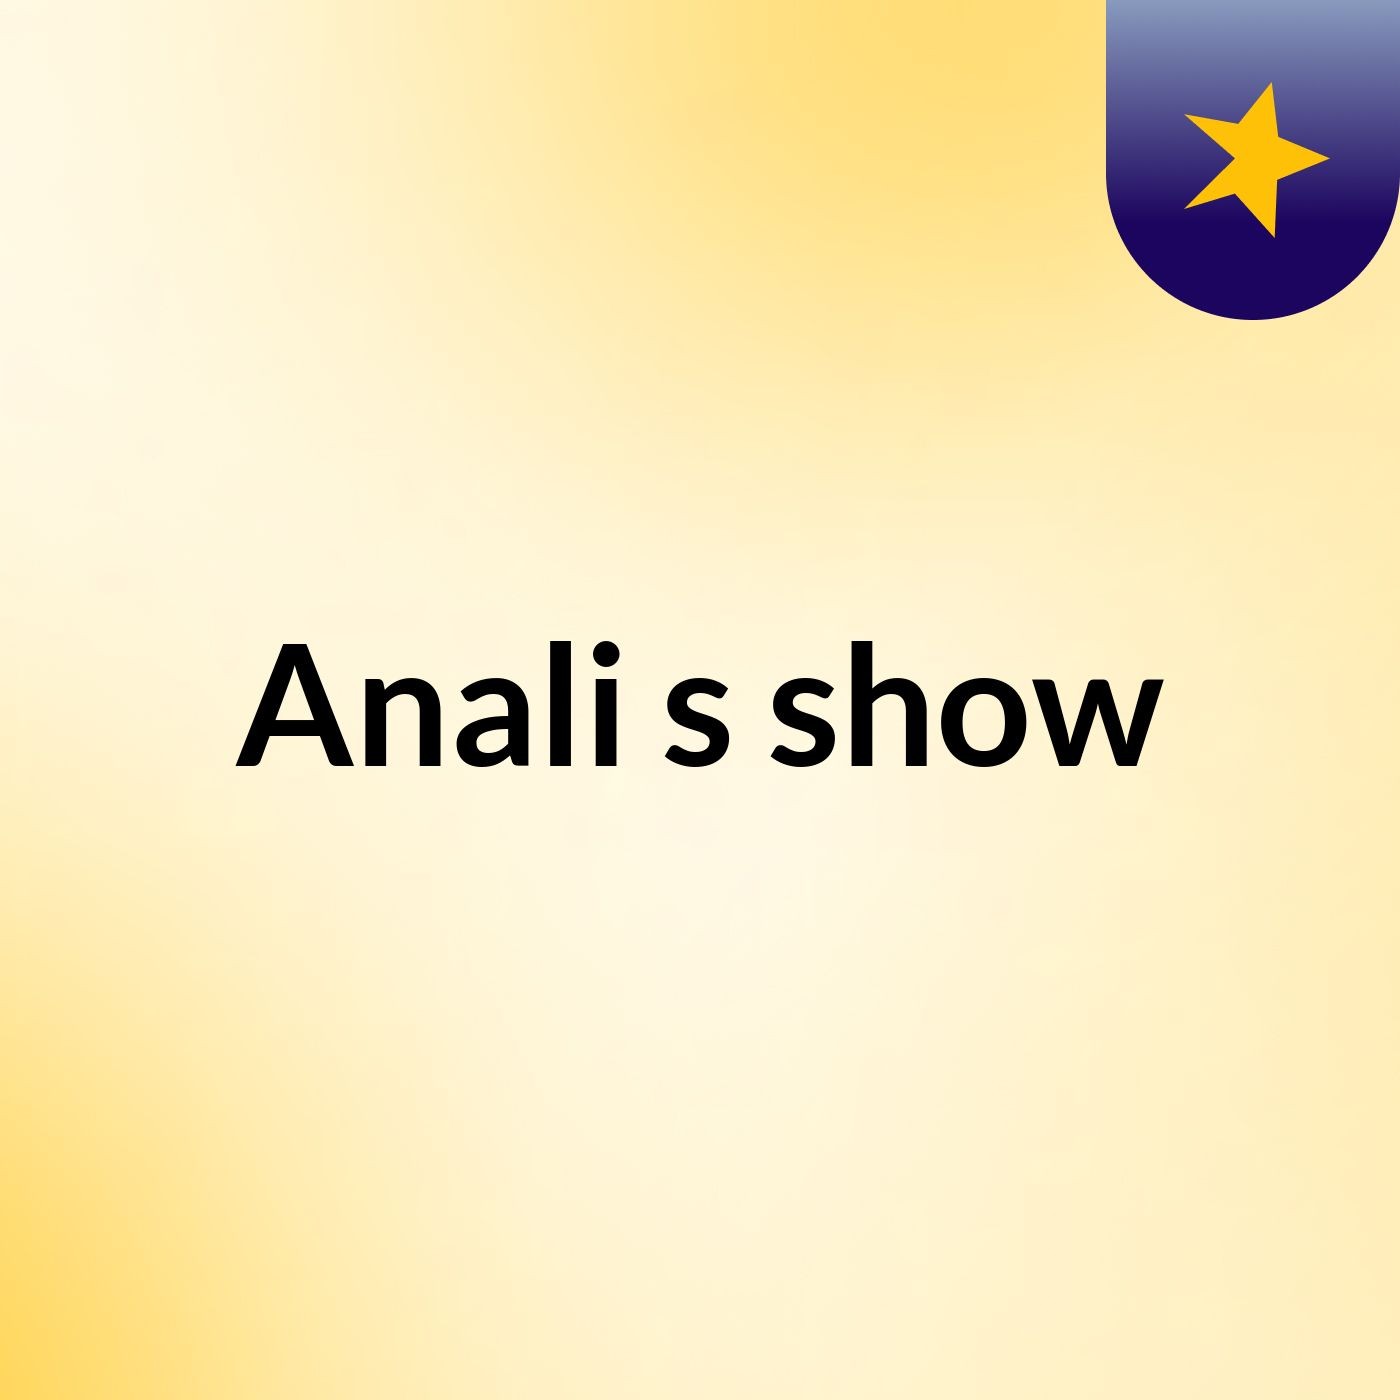 Anali's show